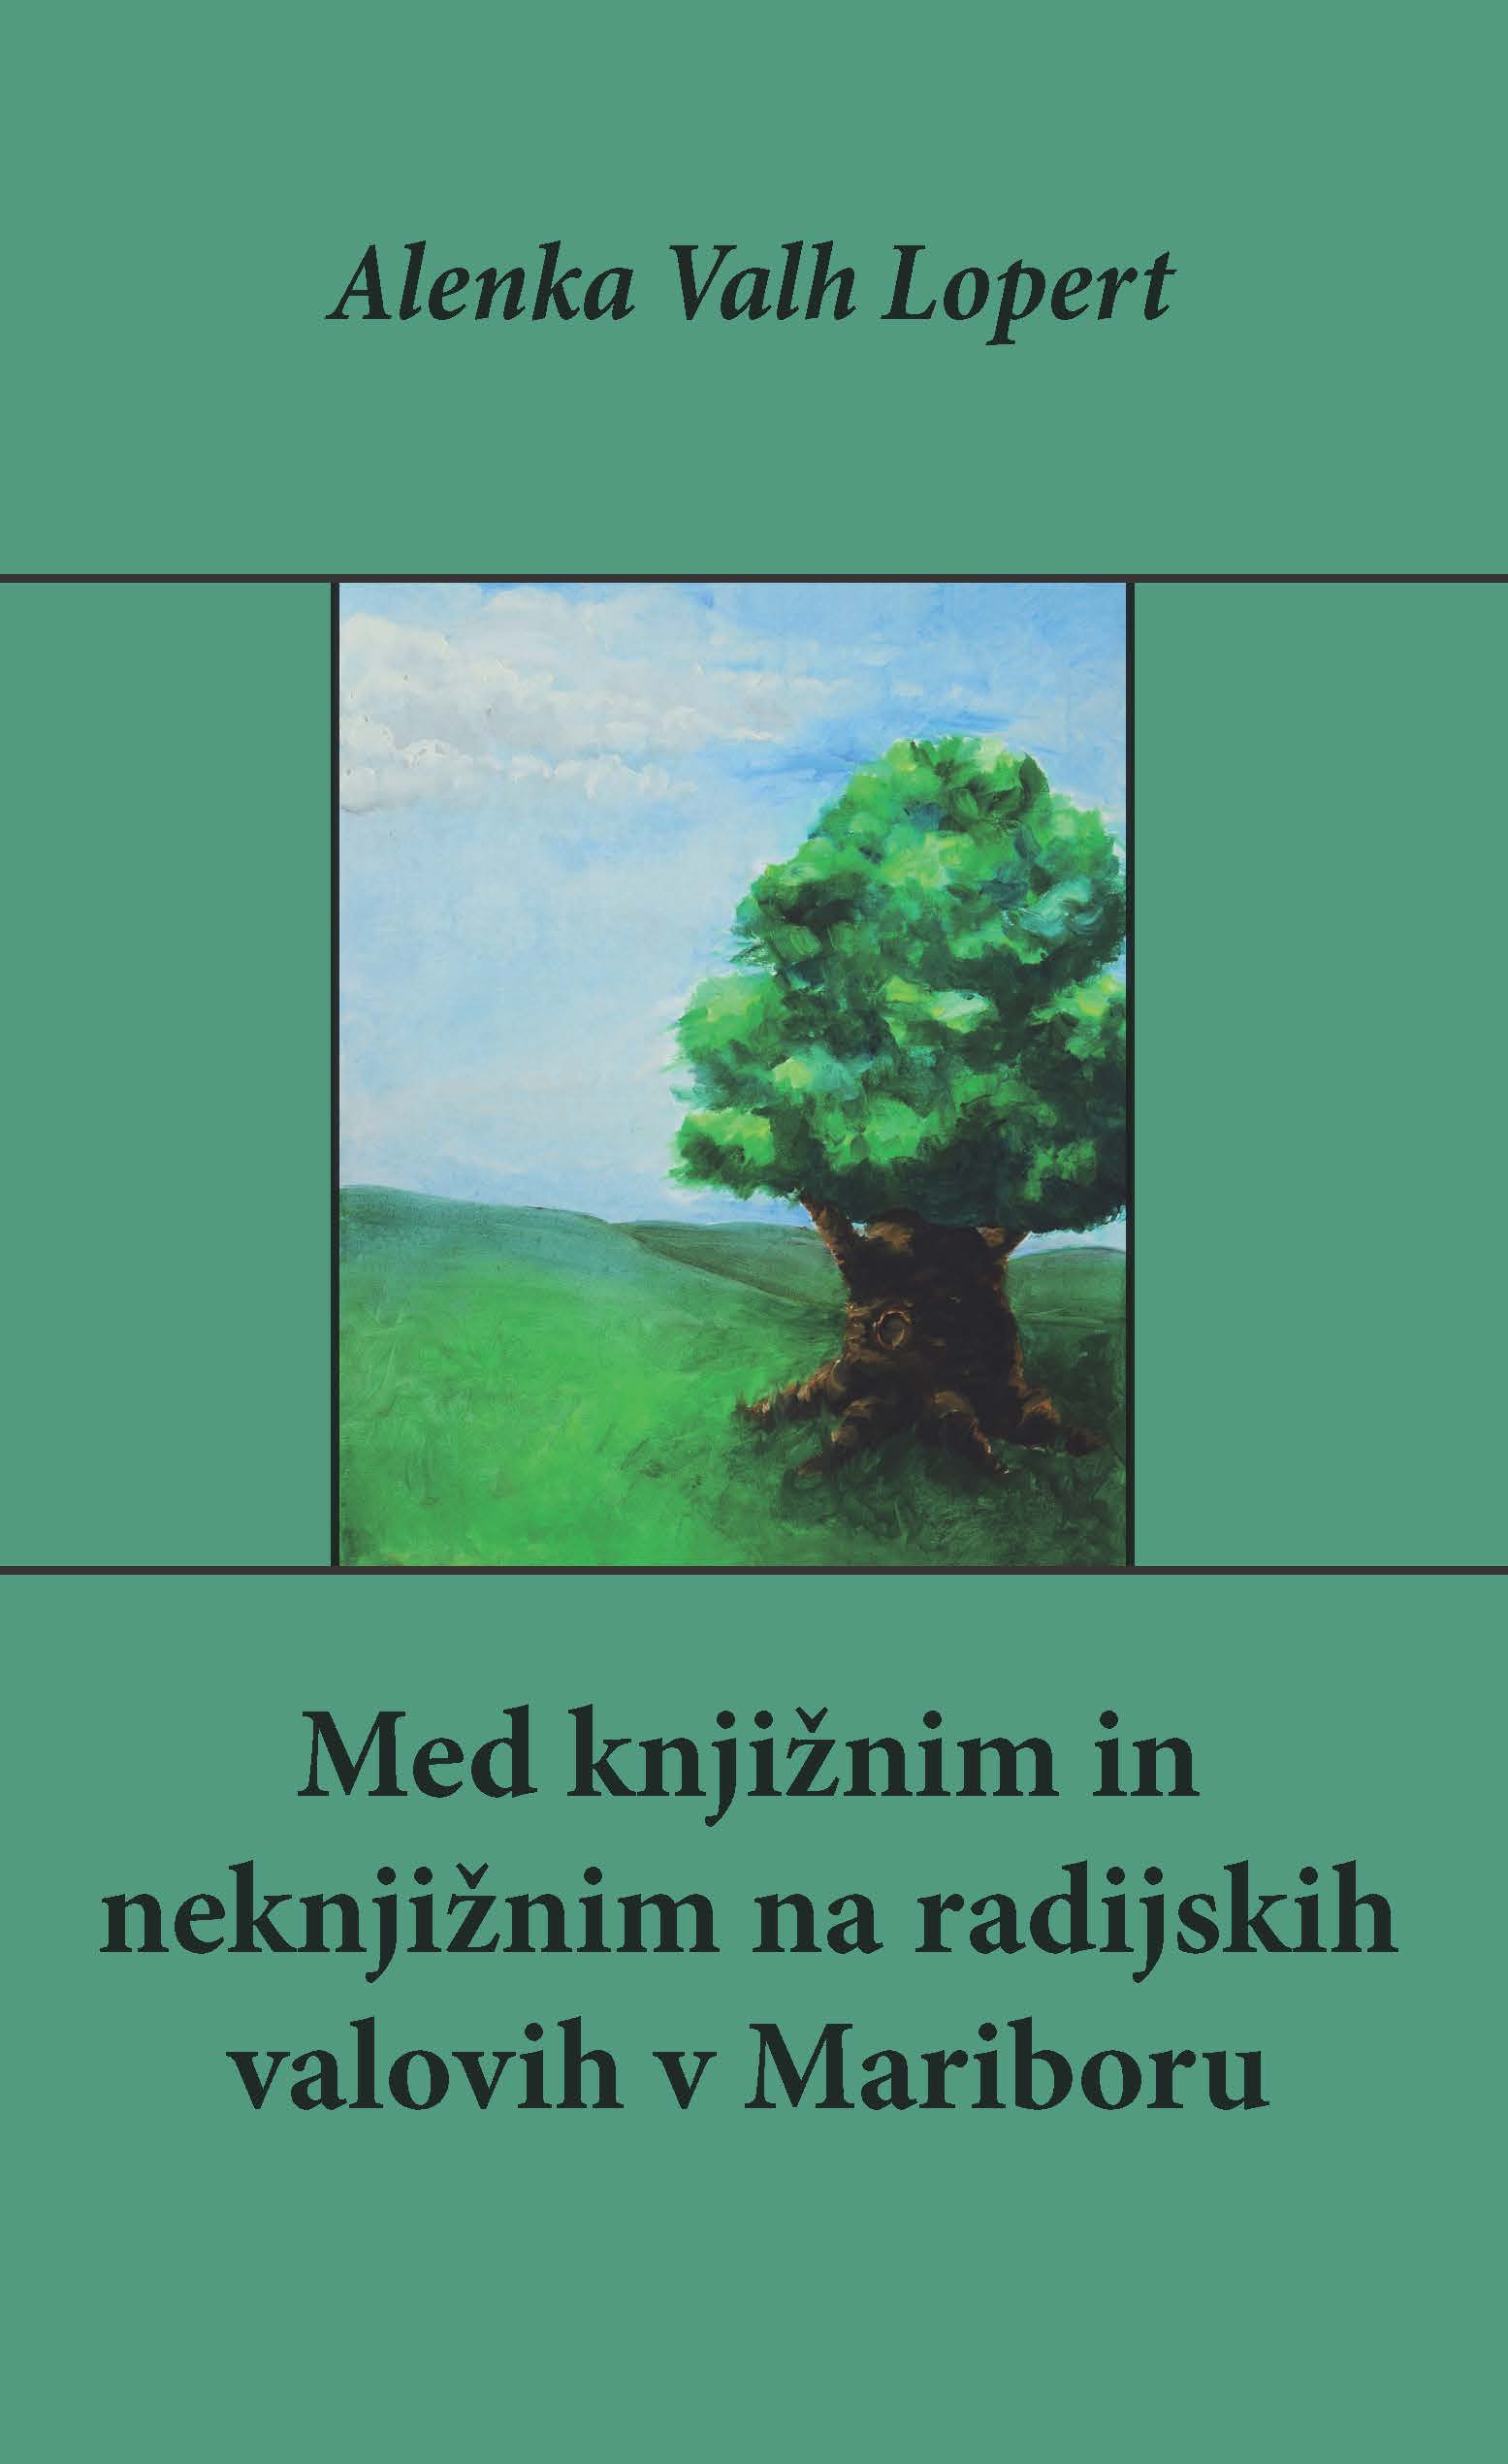 Book Image